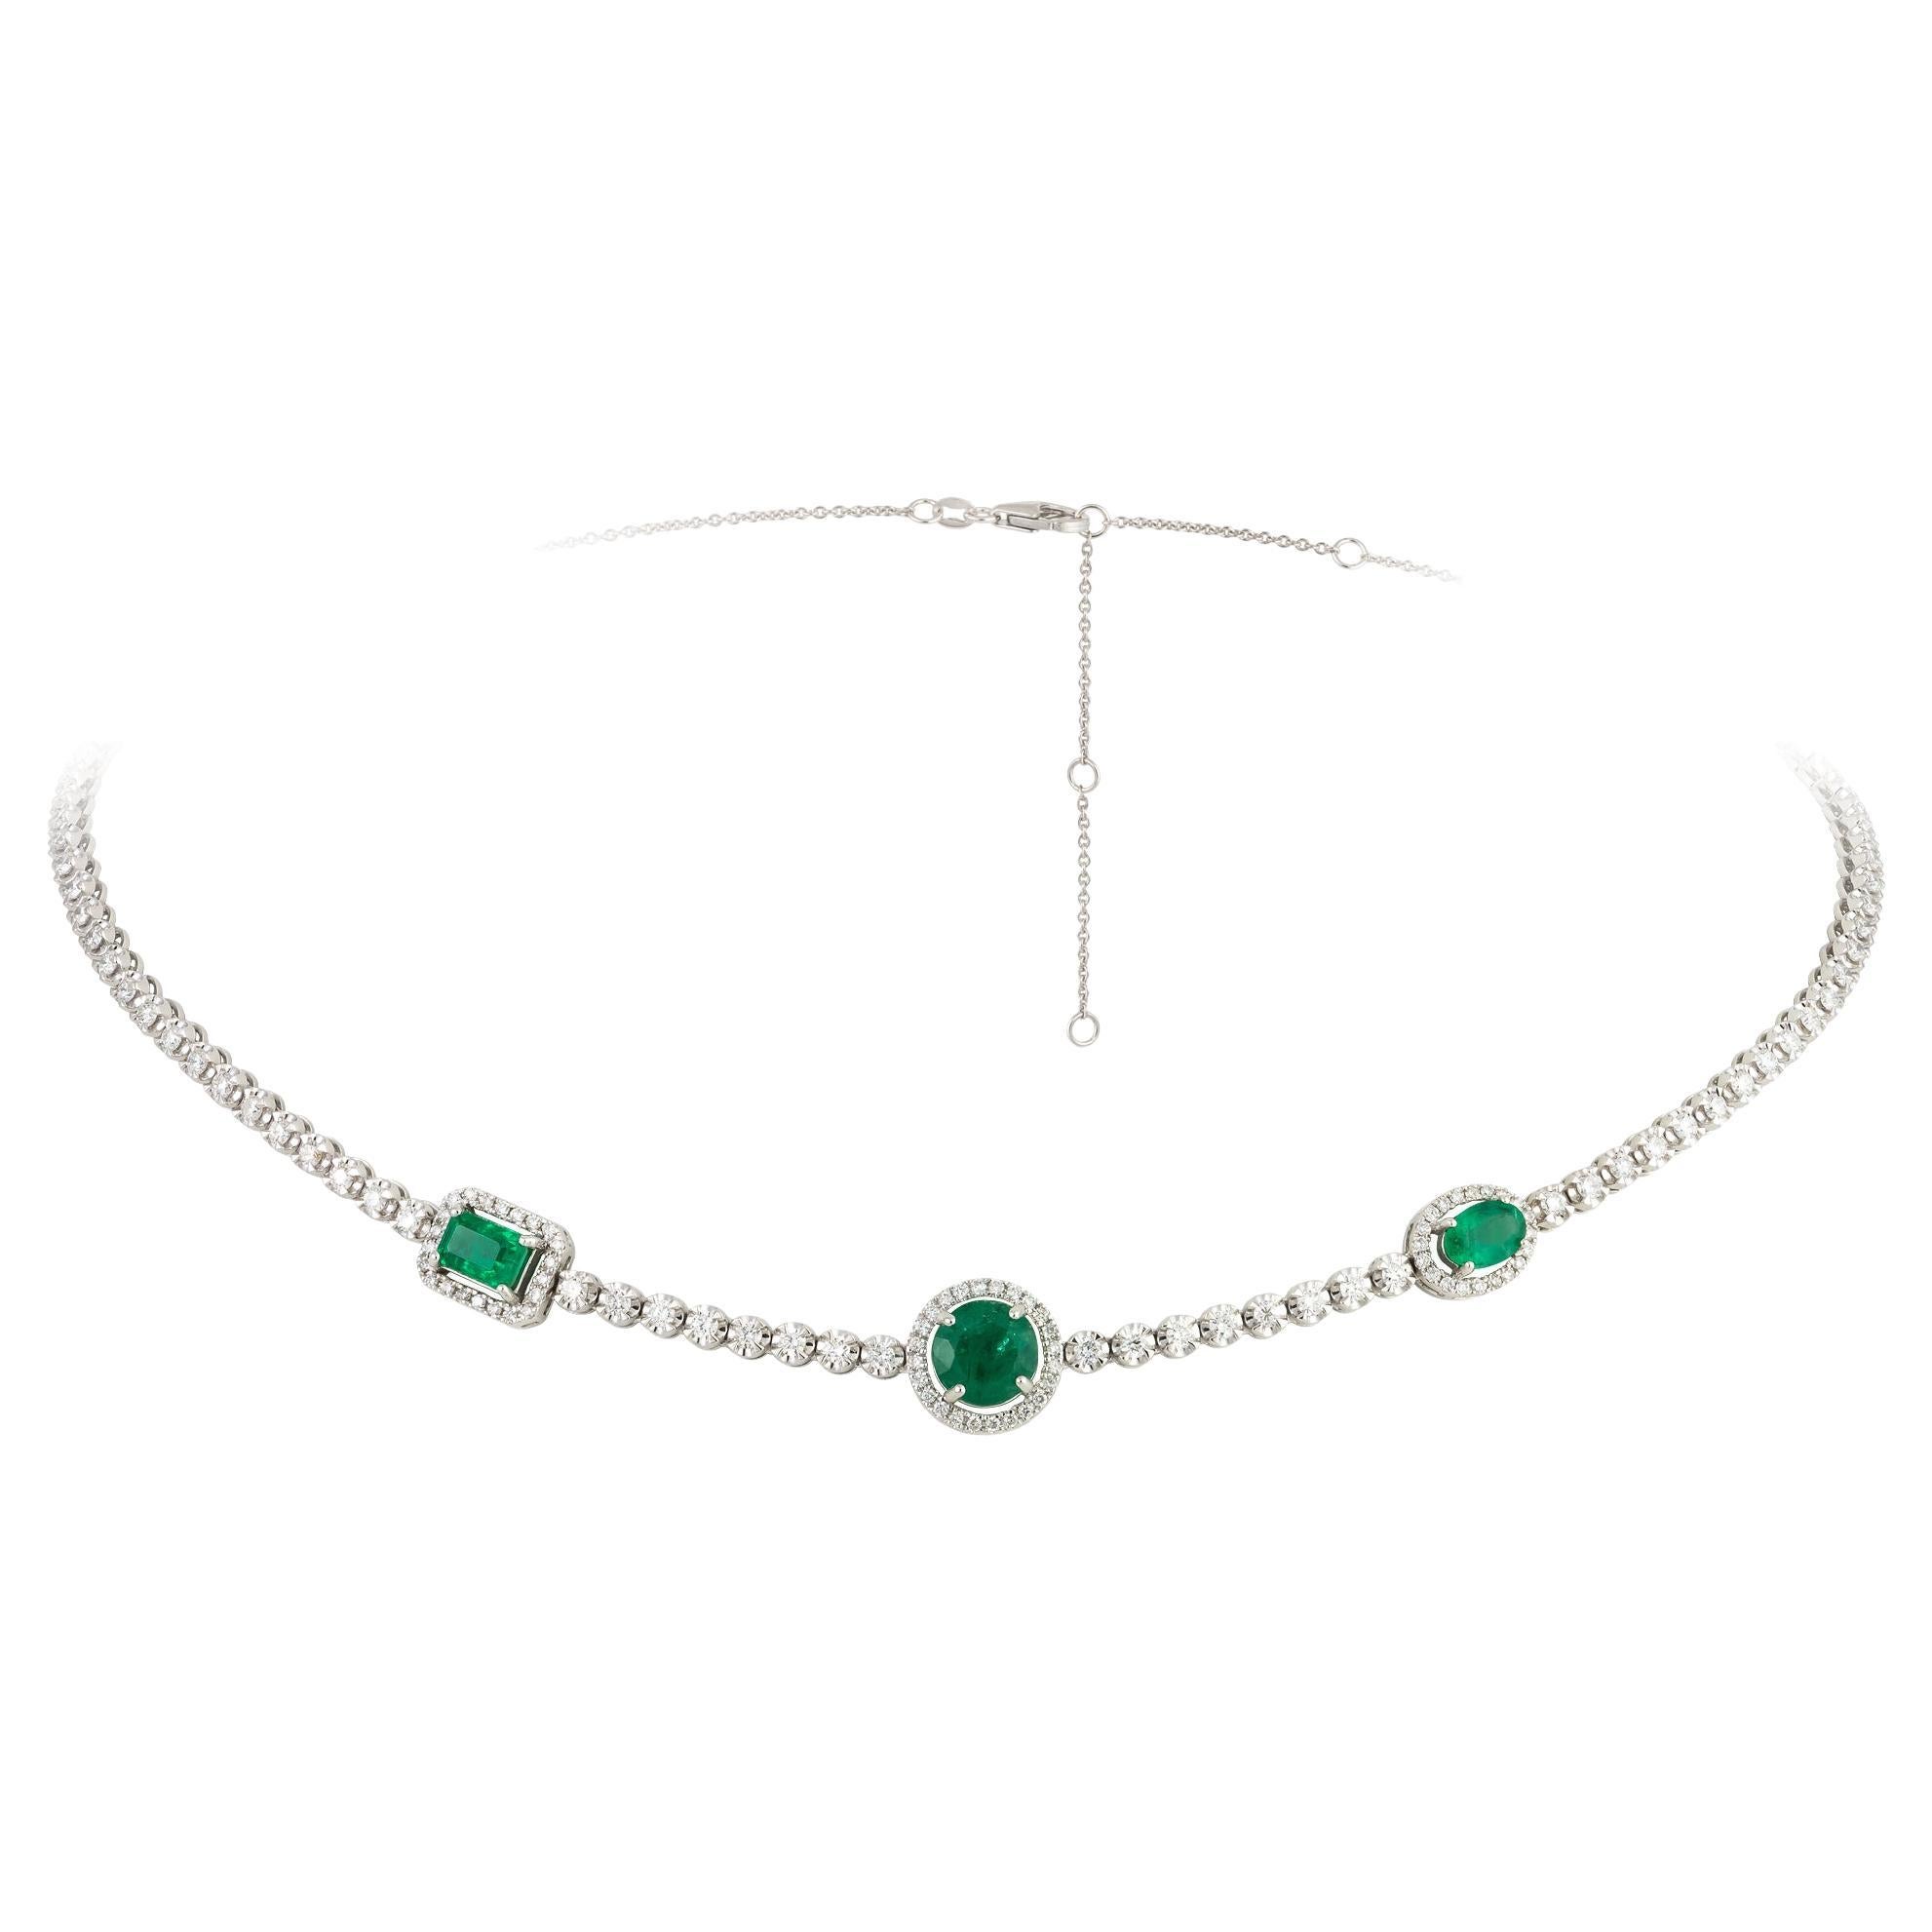 Choker White Gold 18K Necklace Emerald Diamond For Her